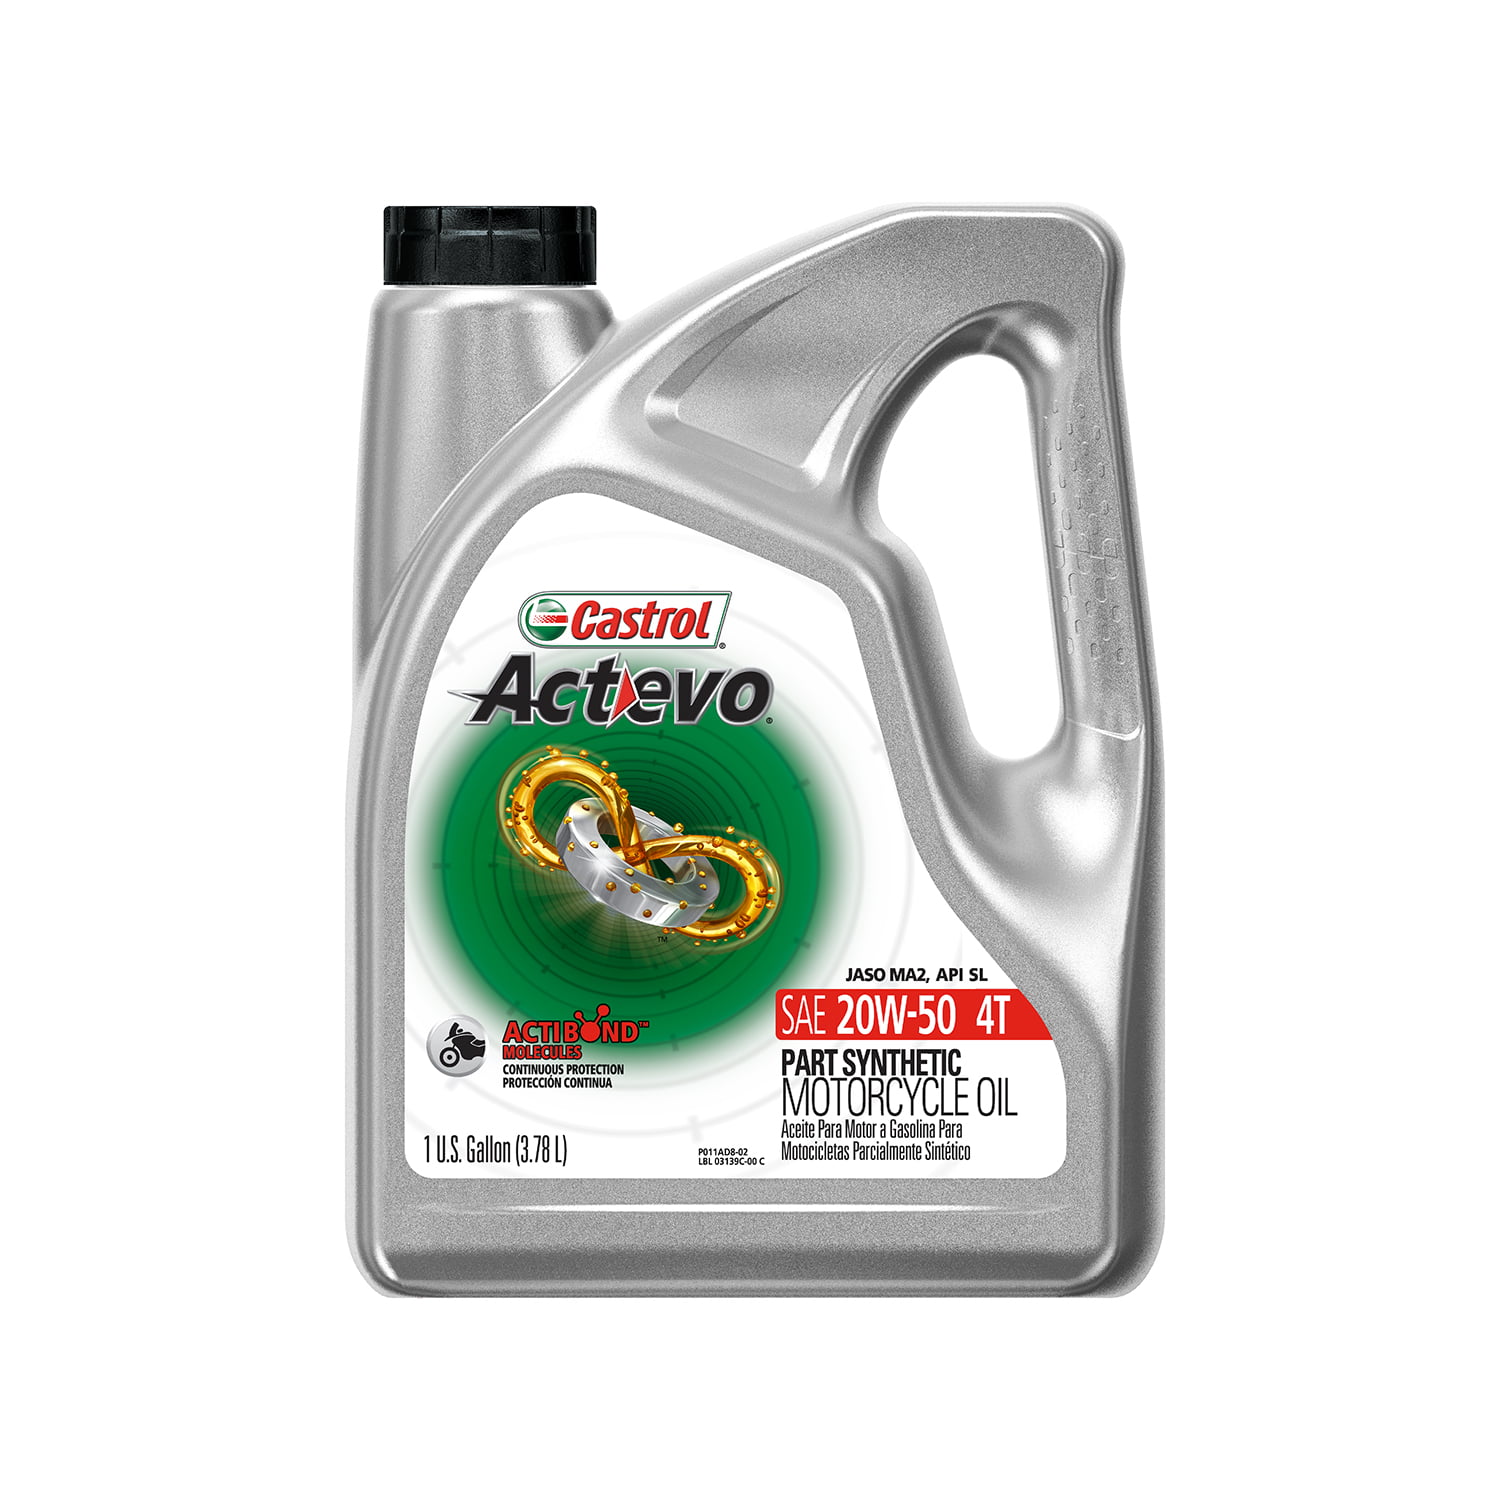 buy-castrol-actevo-4t-20w-50-part-synthetic-motorcycle-oil-1-gallon